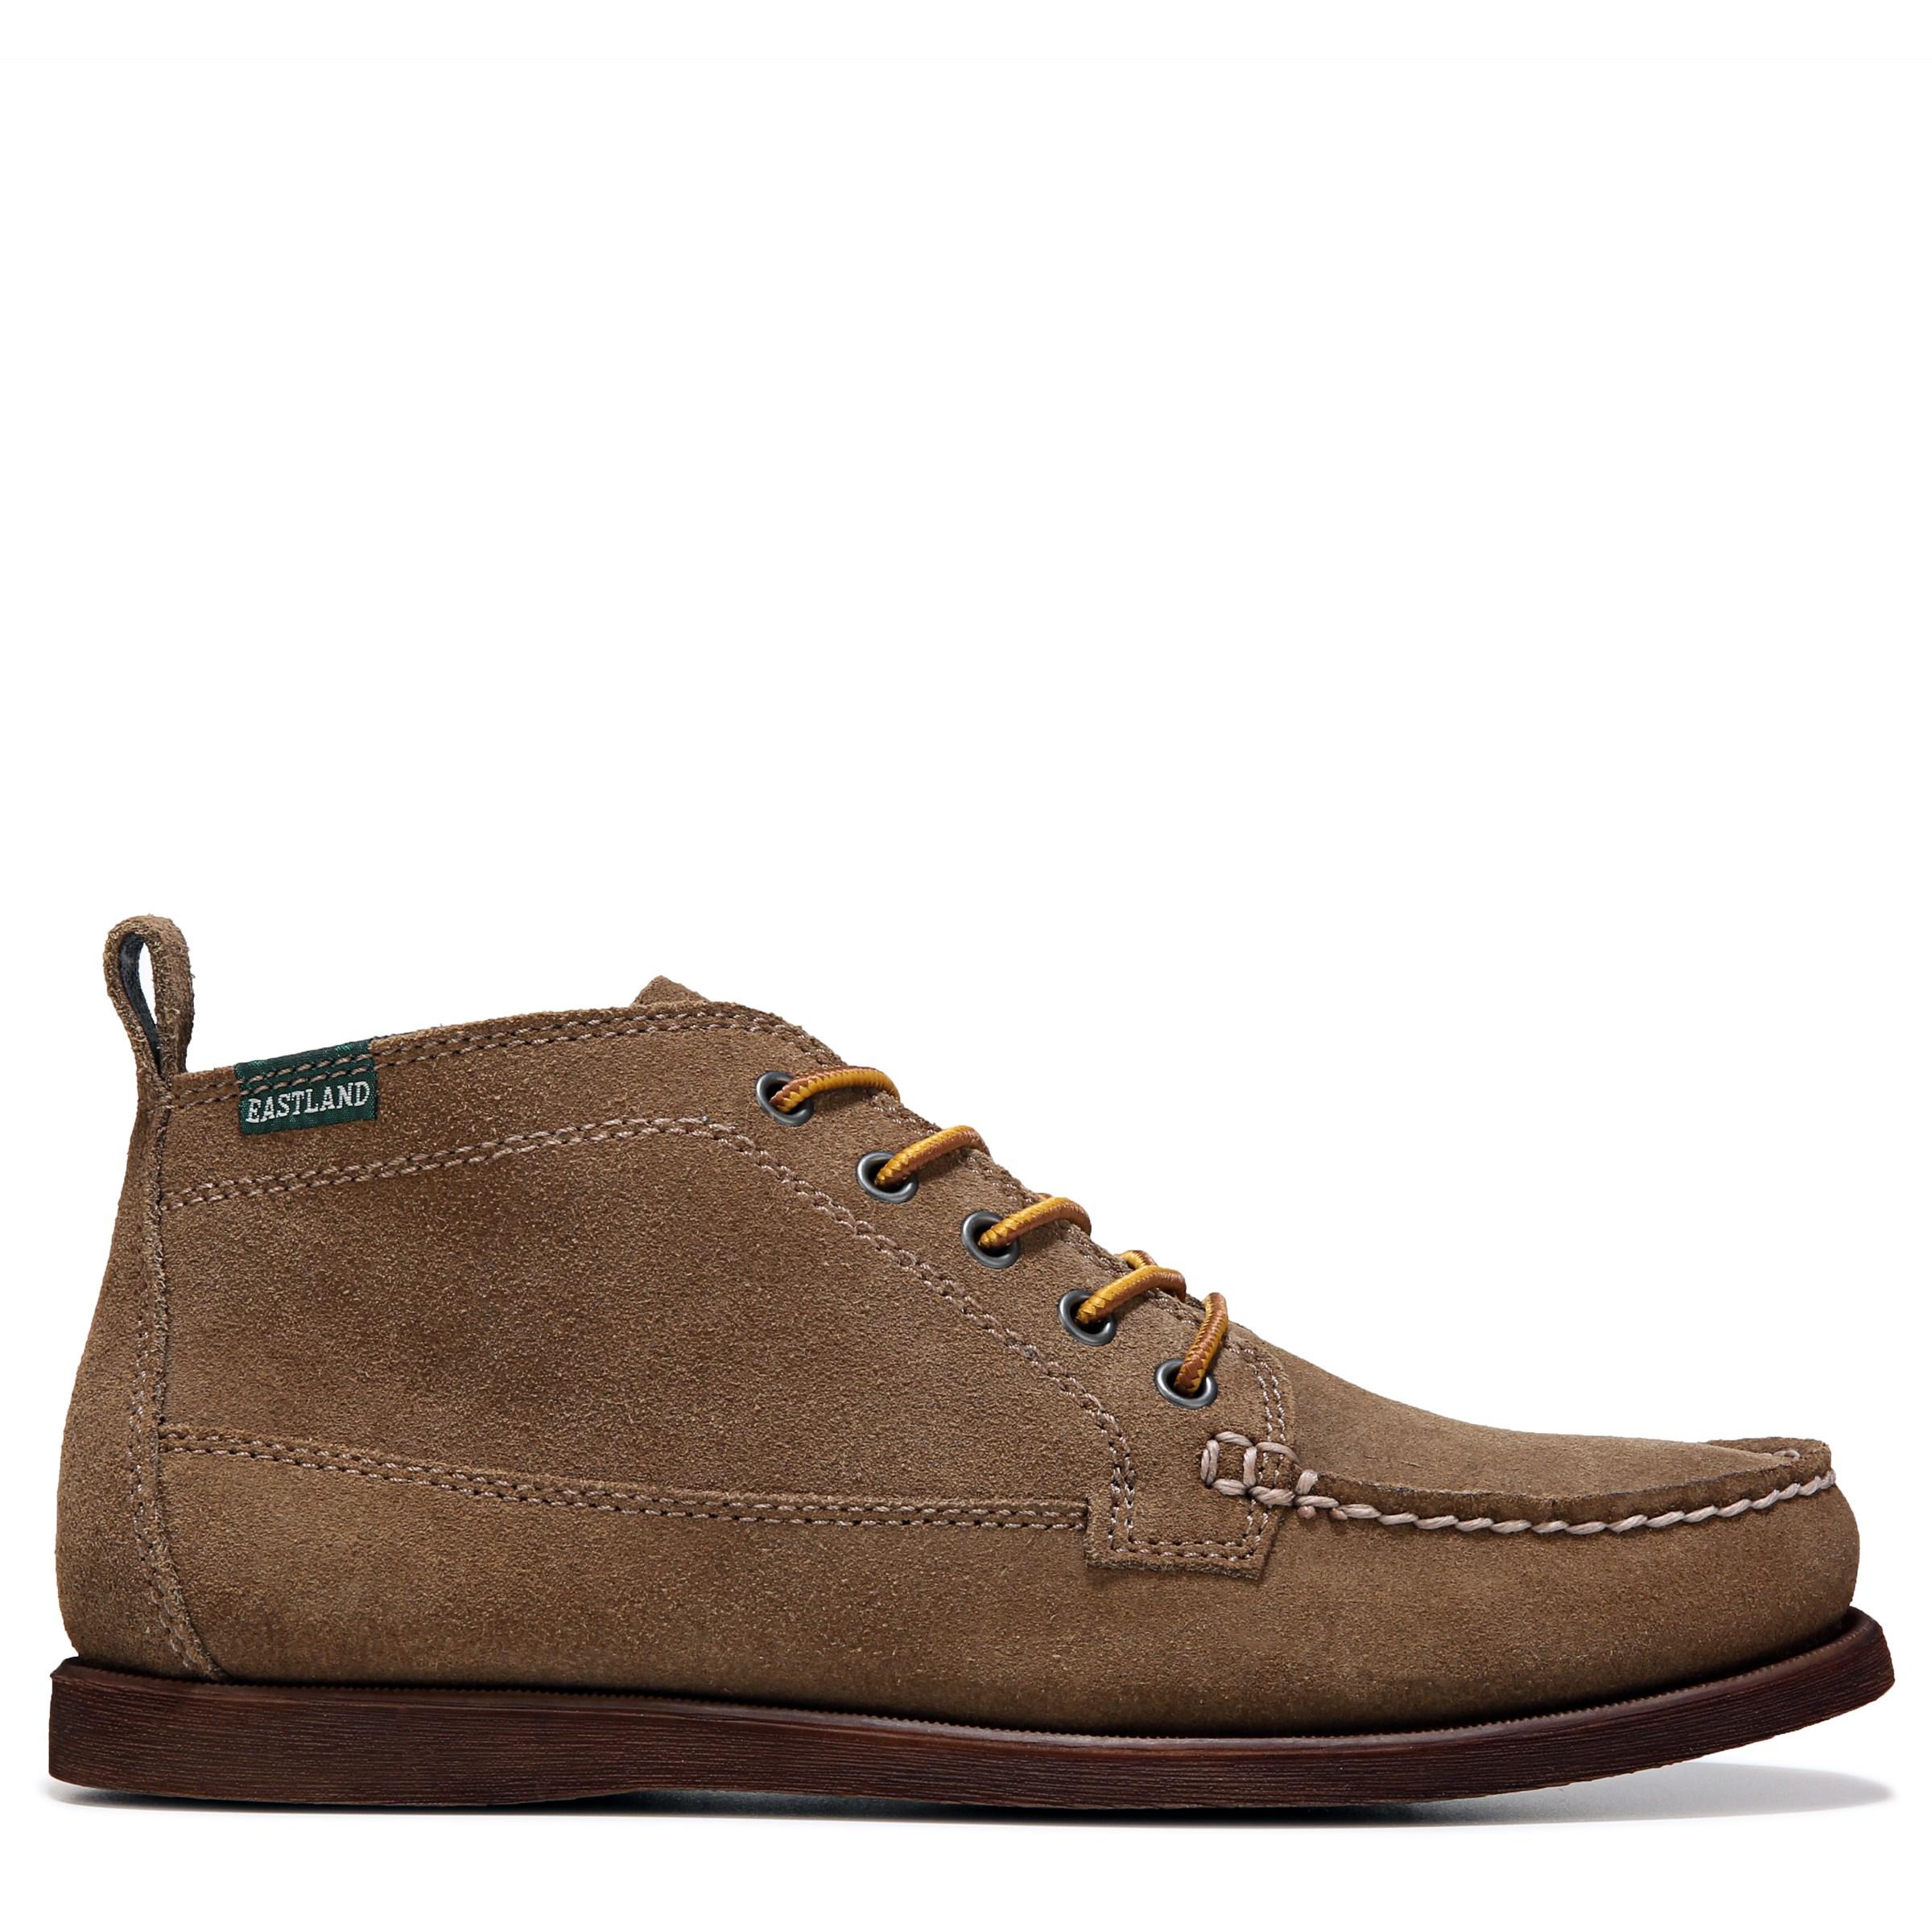 Eastland Seneca Moc Toe Ankle Boots in Khaki (Brown) for Men - Lyst